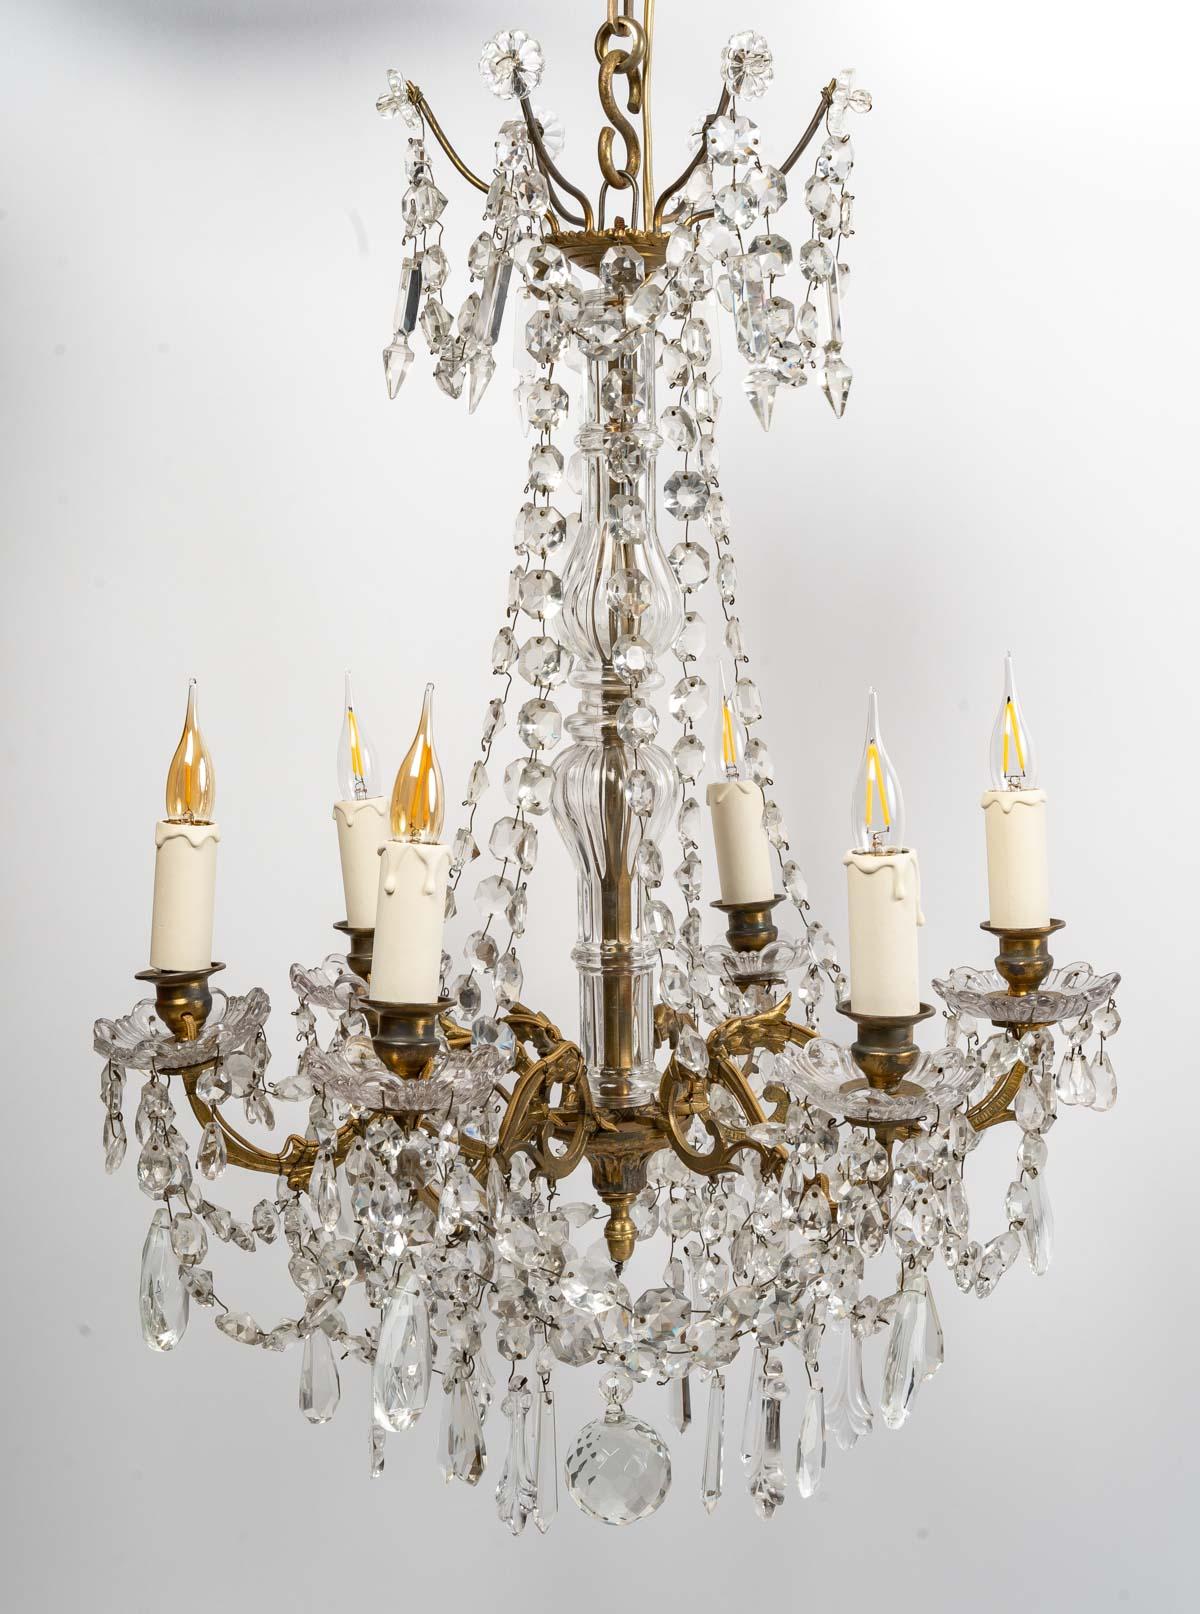 Napoleon III Baccarat crystal chandelier, 19th century